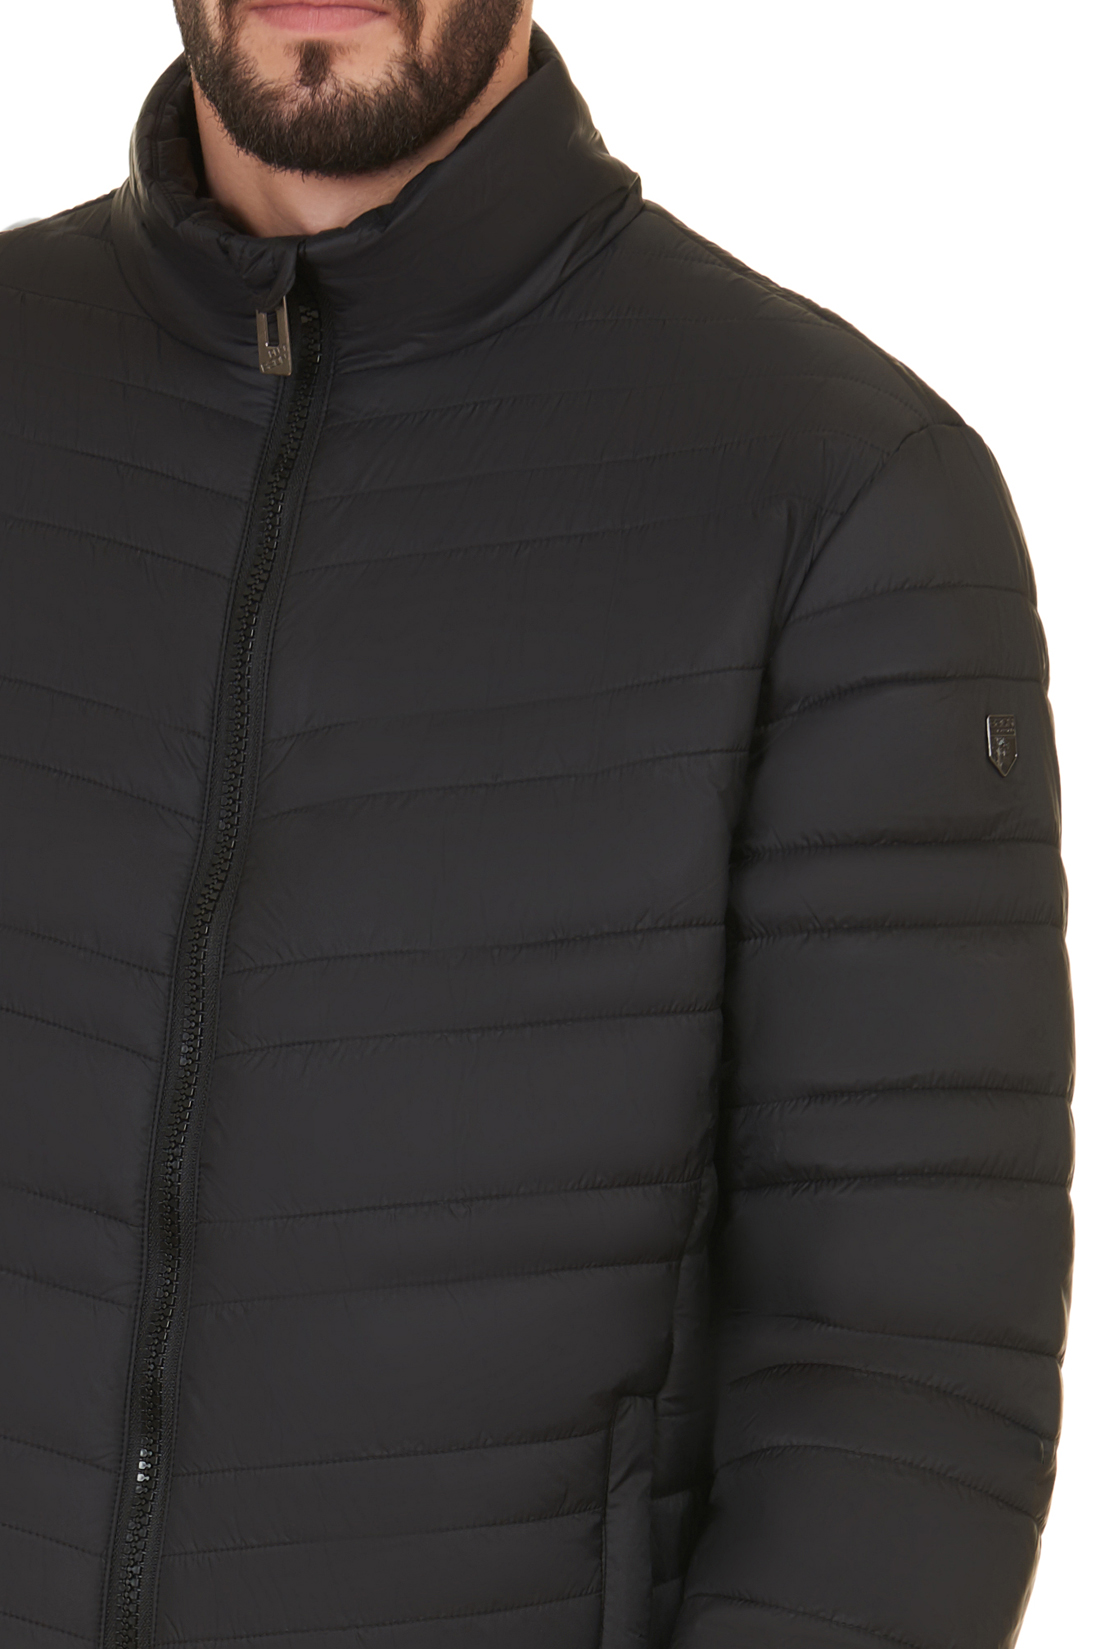 Куртка с наклонной простёжкой (арт. baon B537522), размер XXL, цвет черный Куртка с наклонной простёжкой (арт. baon B537522) - фото 4